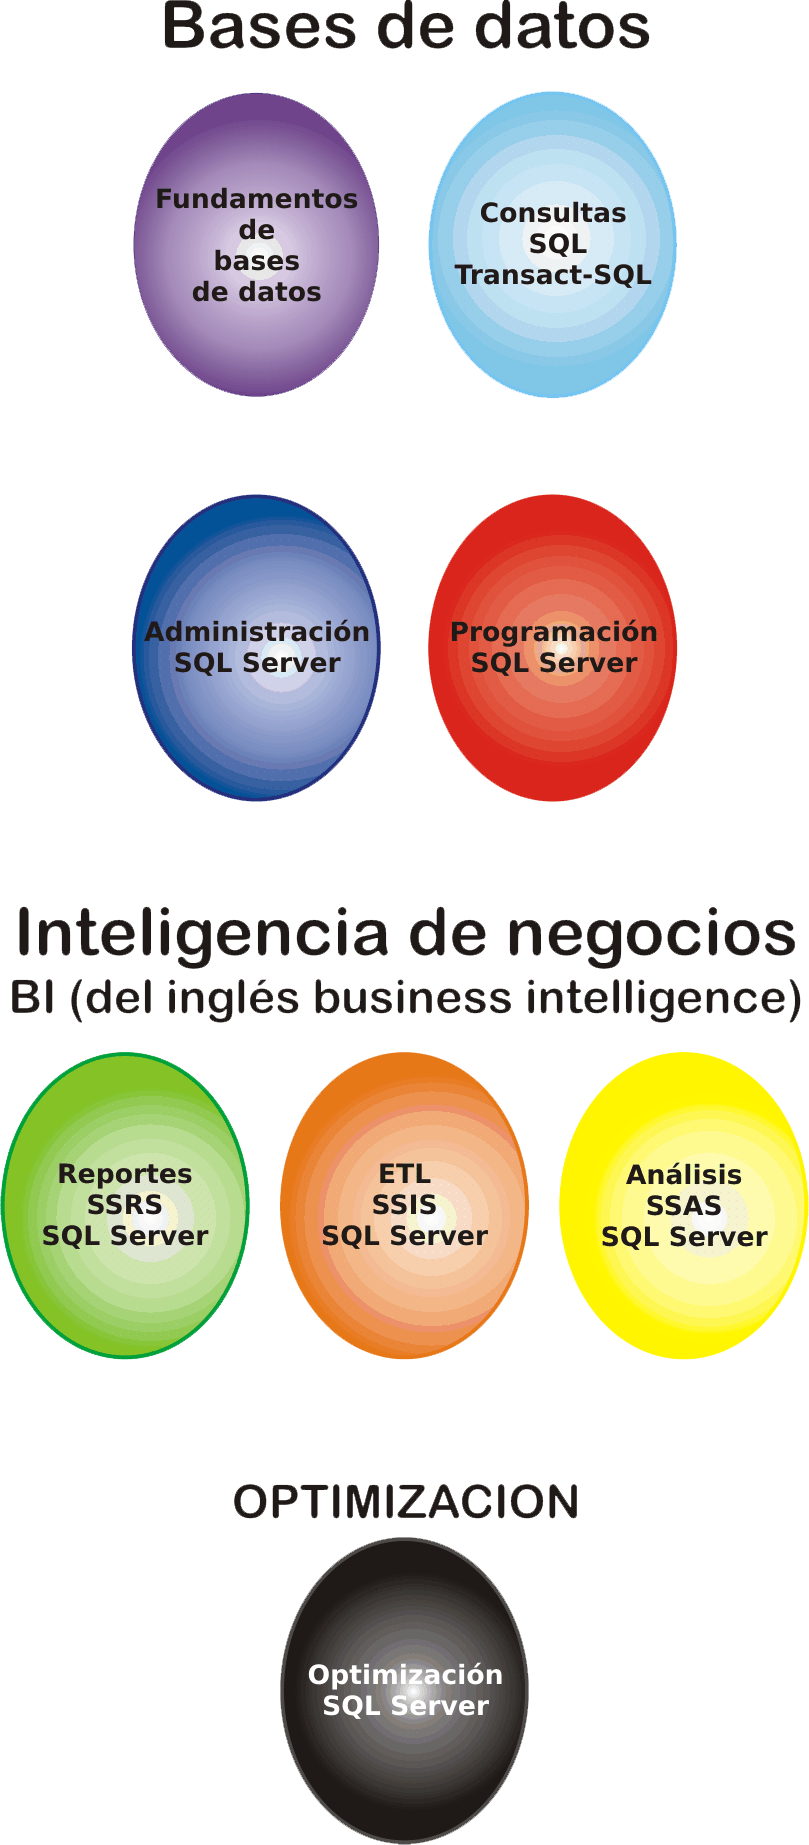 Bases de datos - SQL Server - Reporting - Integration - Analysis